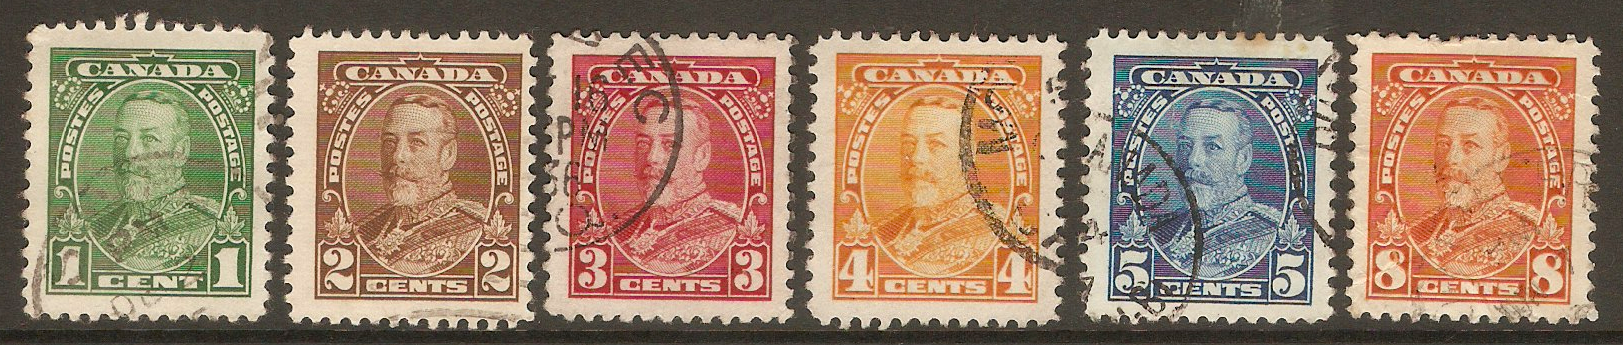 Canada 1935 King George V definitive series. SG341-SG346.